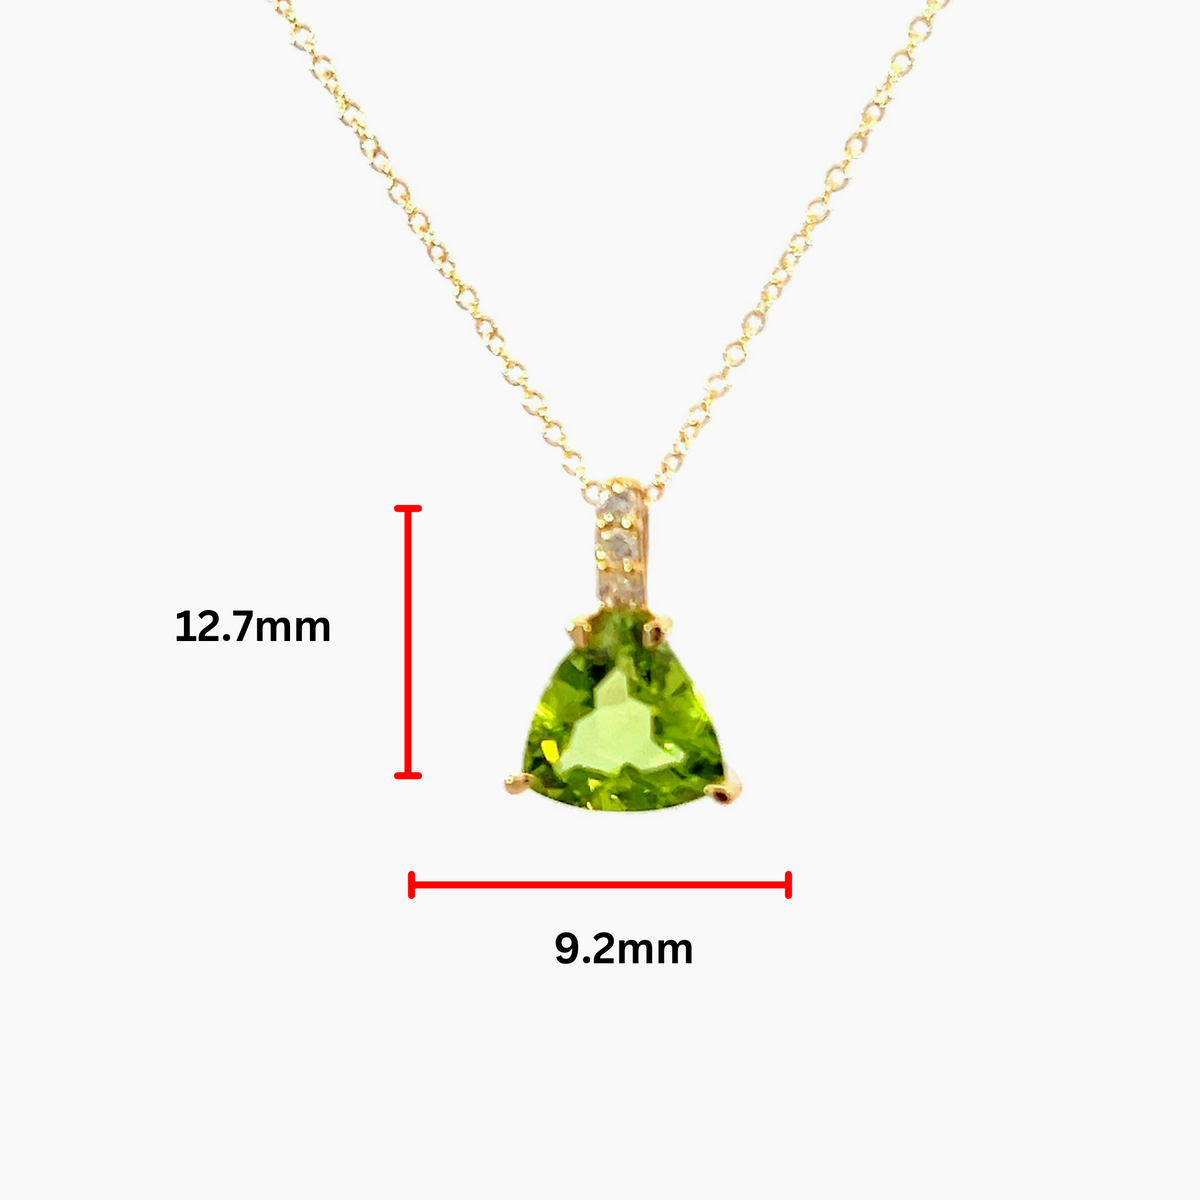 10K Yellow Gold 8mm Trillion Cut Peridot and 0.059cttw Diamond Pendant - 18 inches